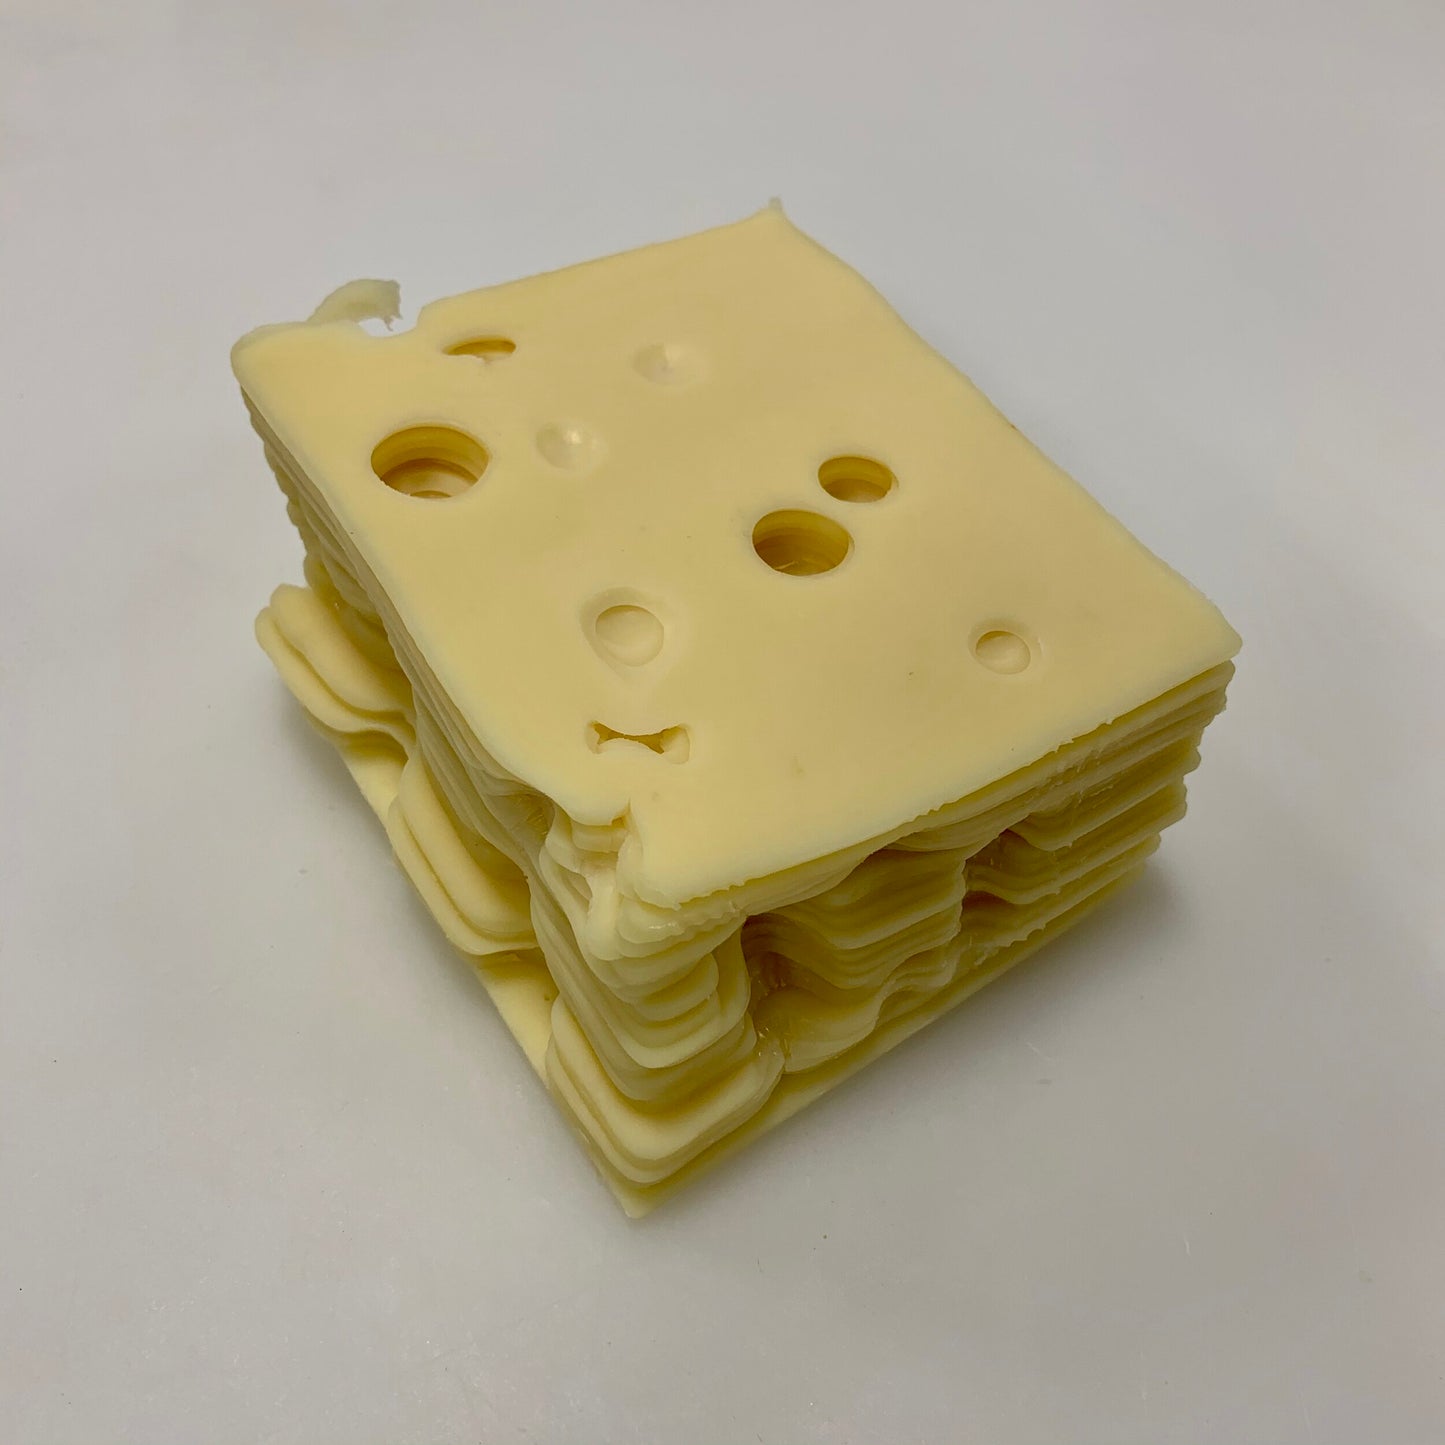 Domestic Swiss Cheese, JFM (Sliced)